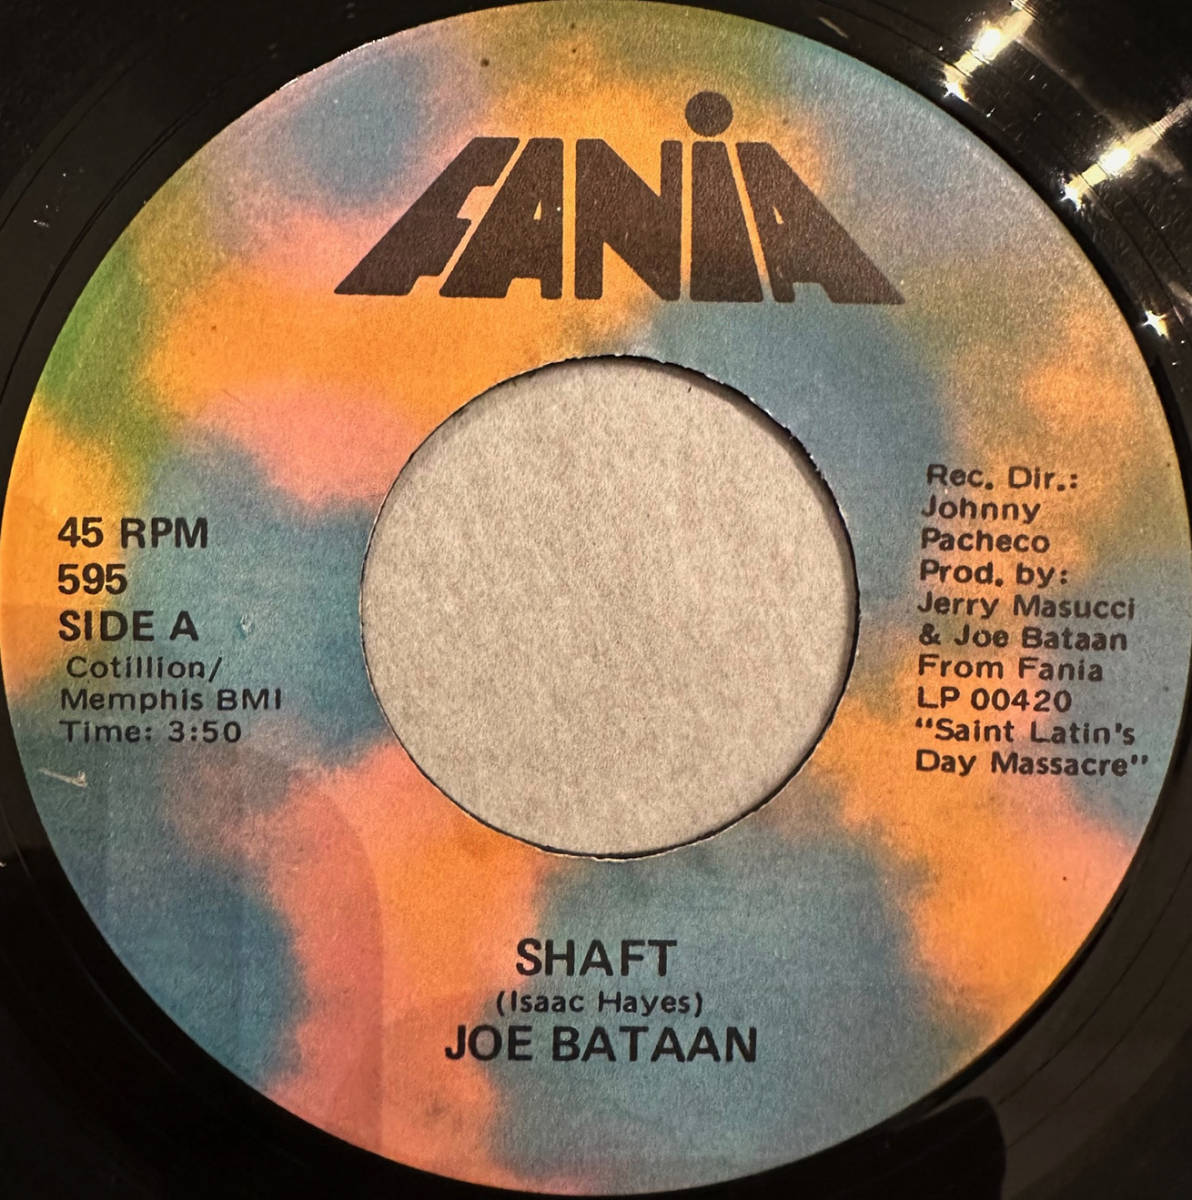 #1972 year US record original Joe Bataan - Shaft / El Regreso 7~EP 595 Fania Records